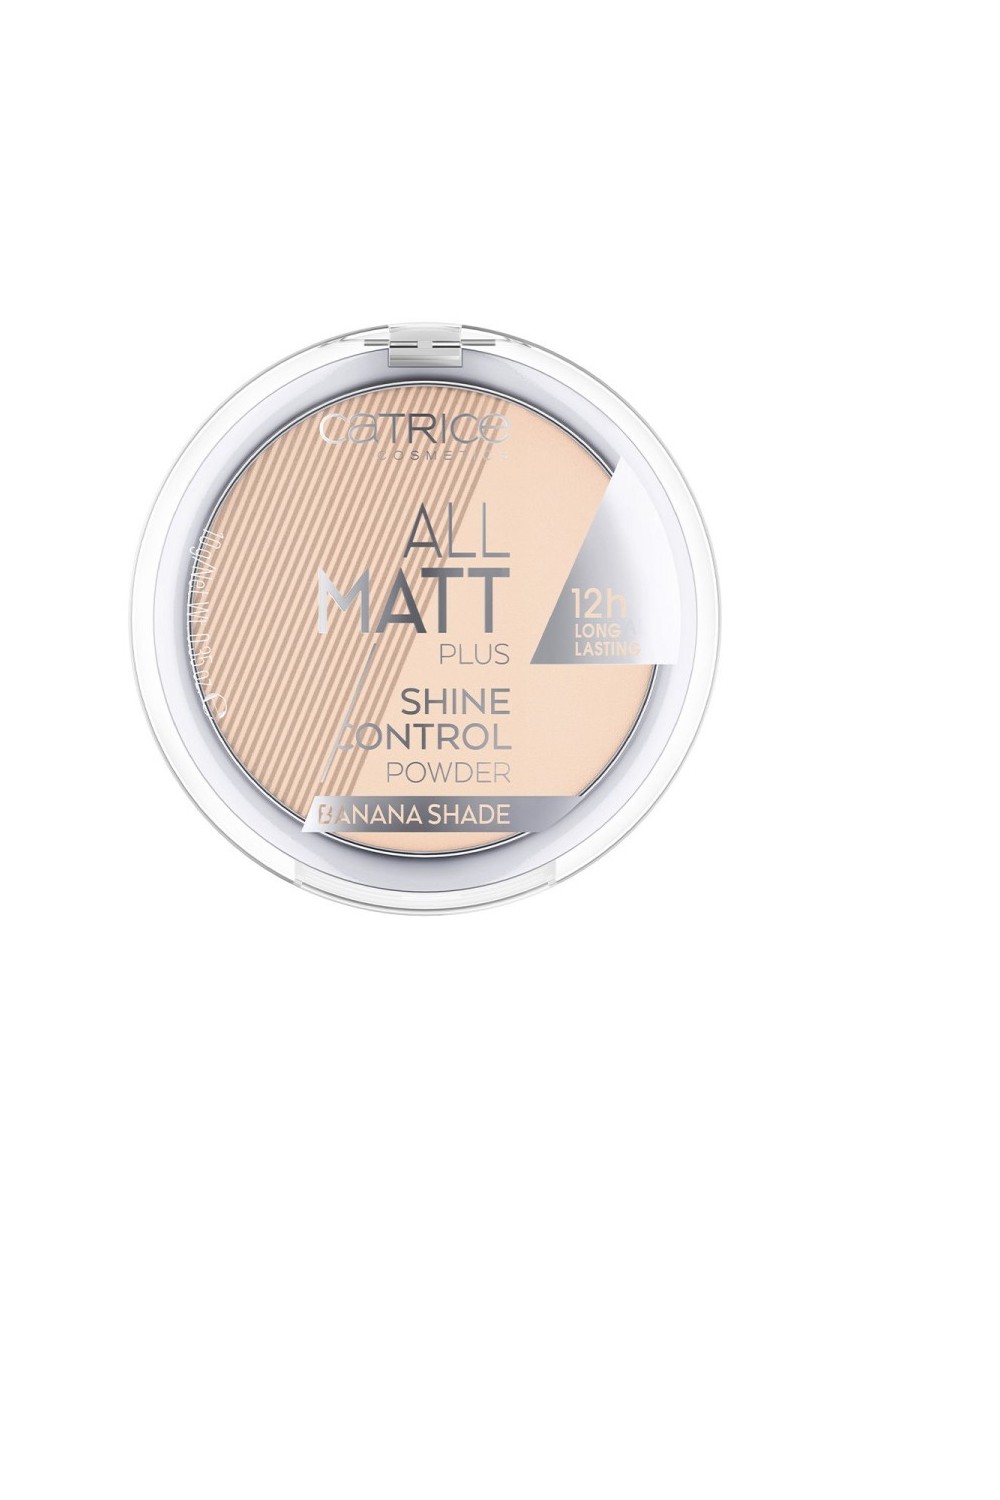 Catrice All Matt Plus Shine Control Powder 002-Amarillo 10g